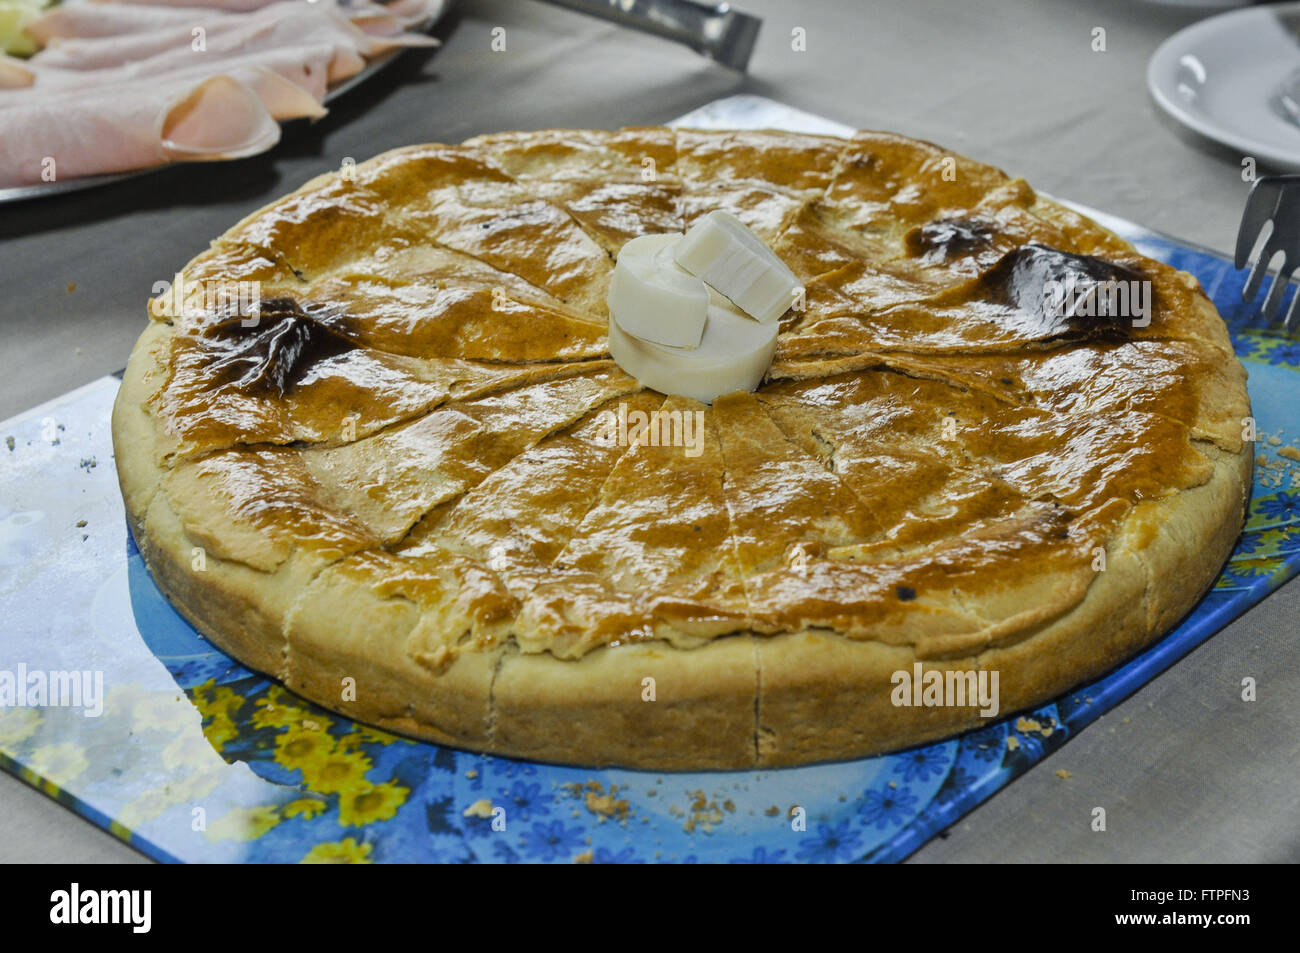 Pie served in the palm Tagacaba neighborhood restaurant Stock Photo